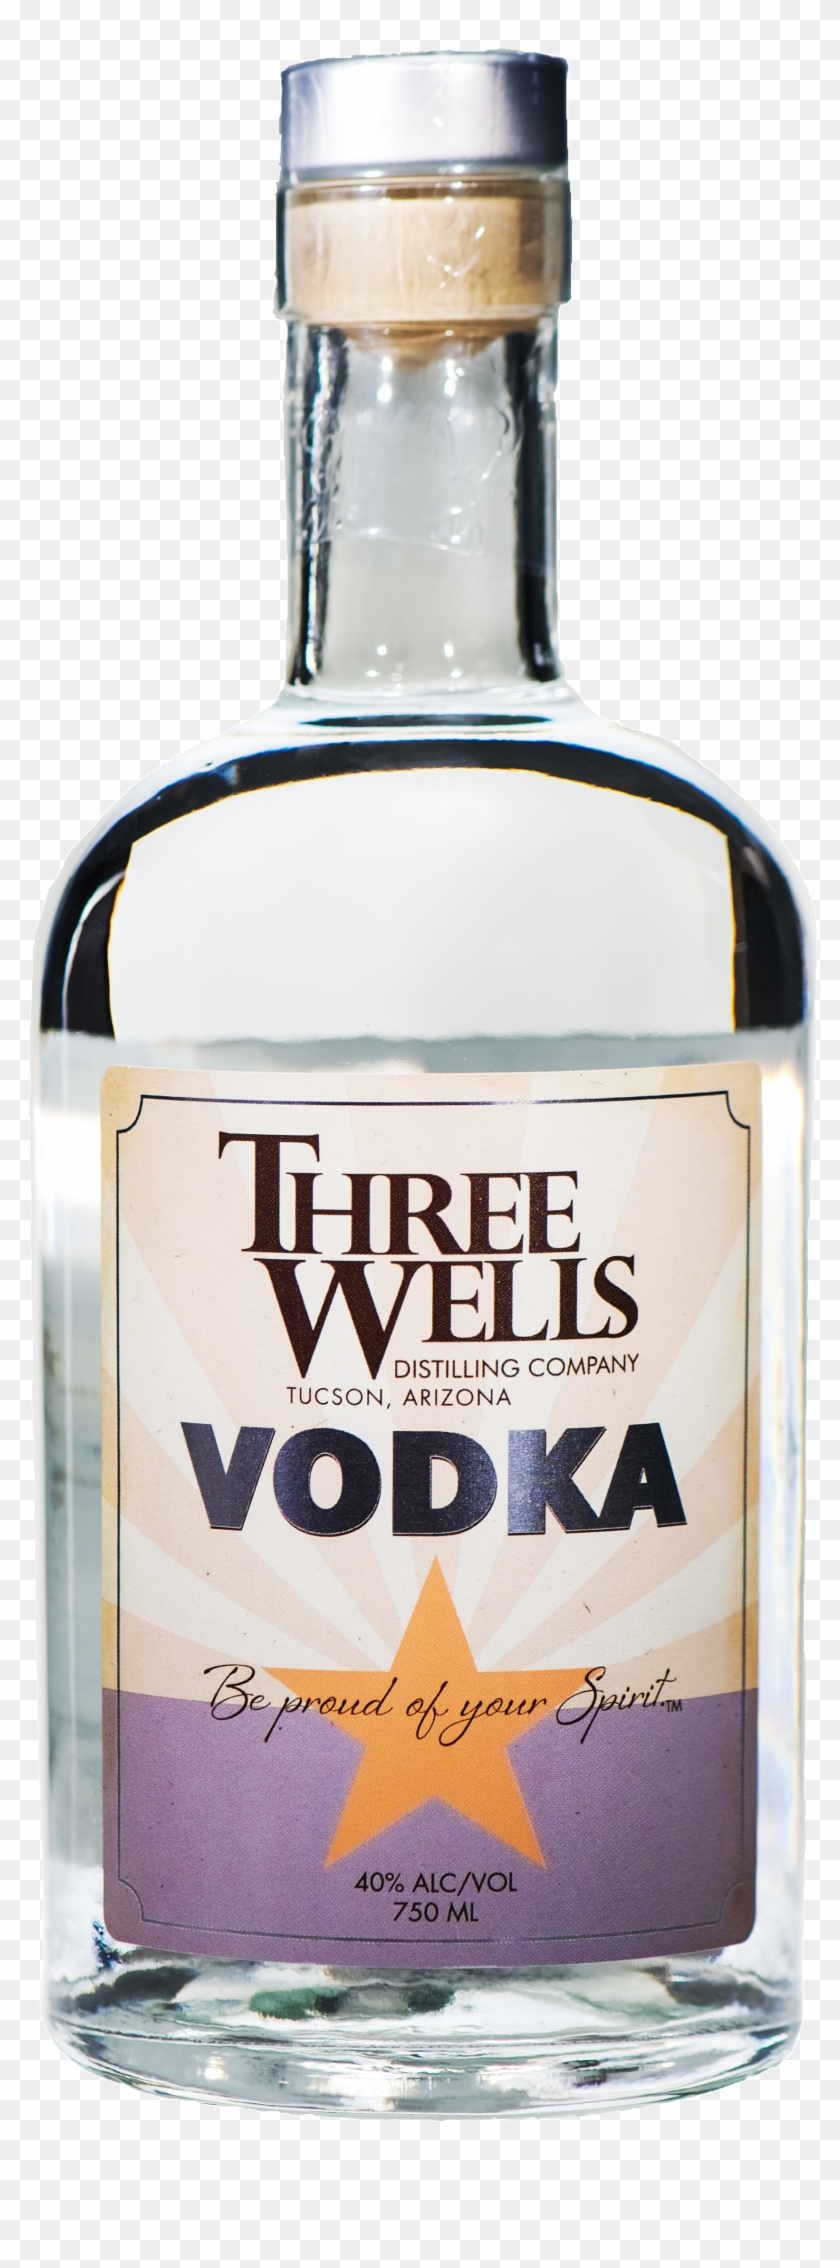 Three Wells Vodka - Glass Bottle Clipart #259778